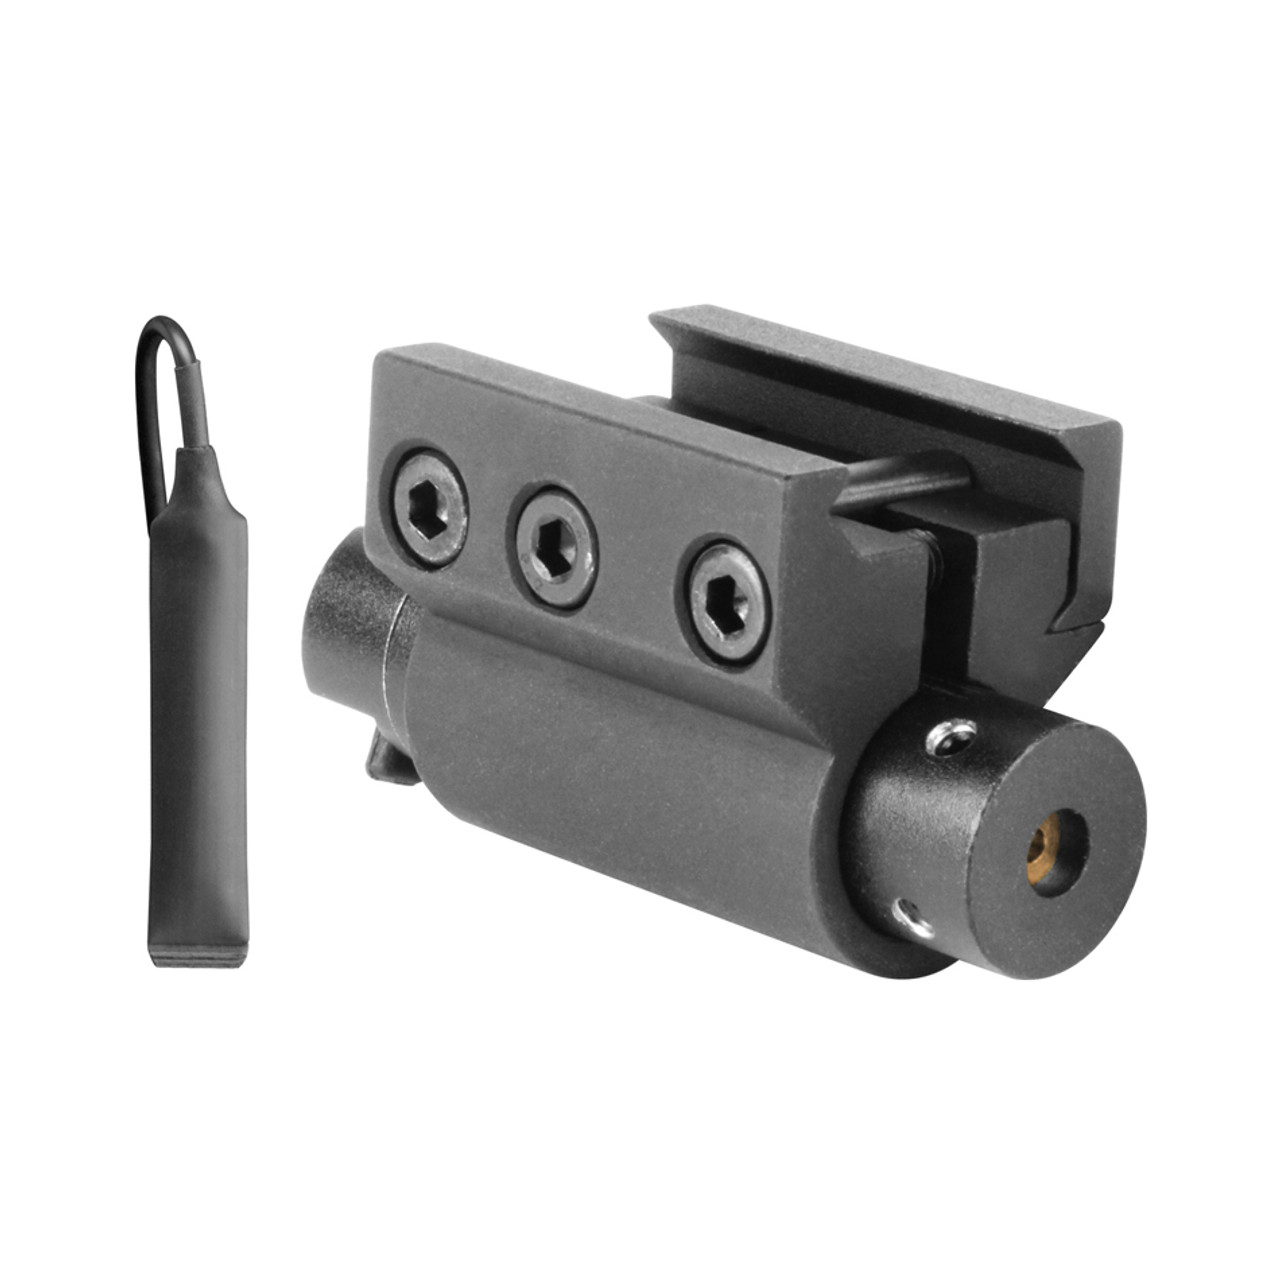 5MW Pistol/Rifle Laser Sight